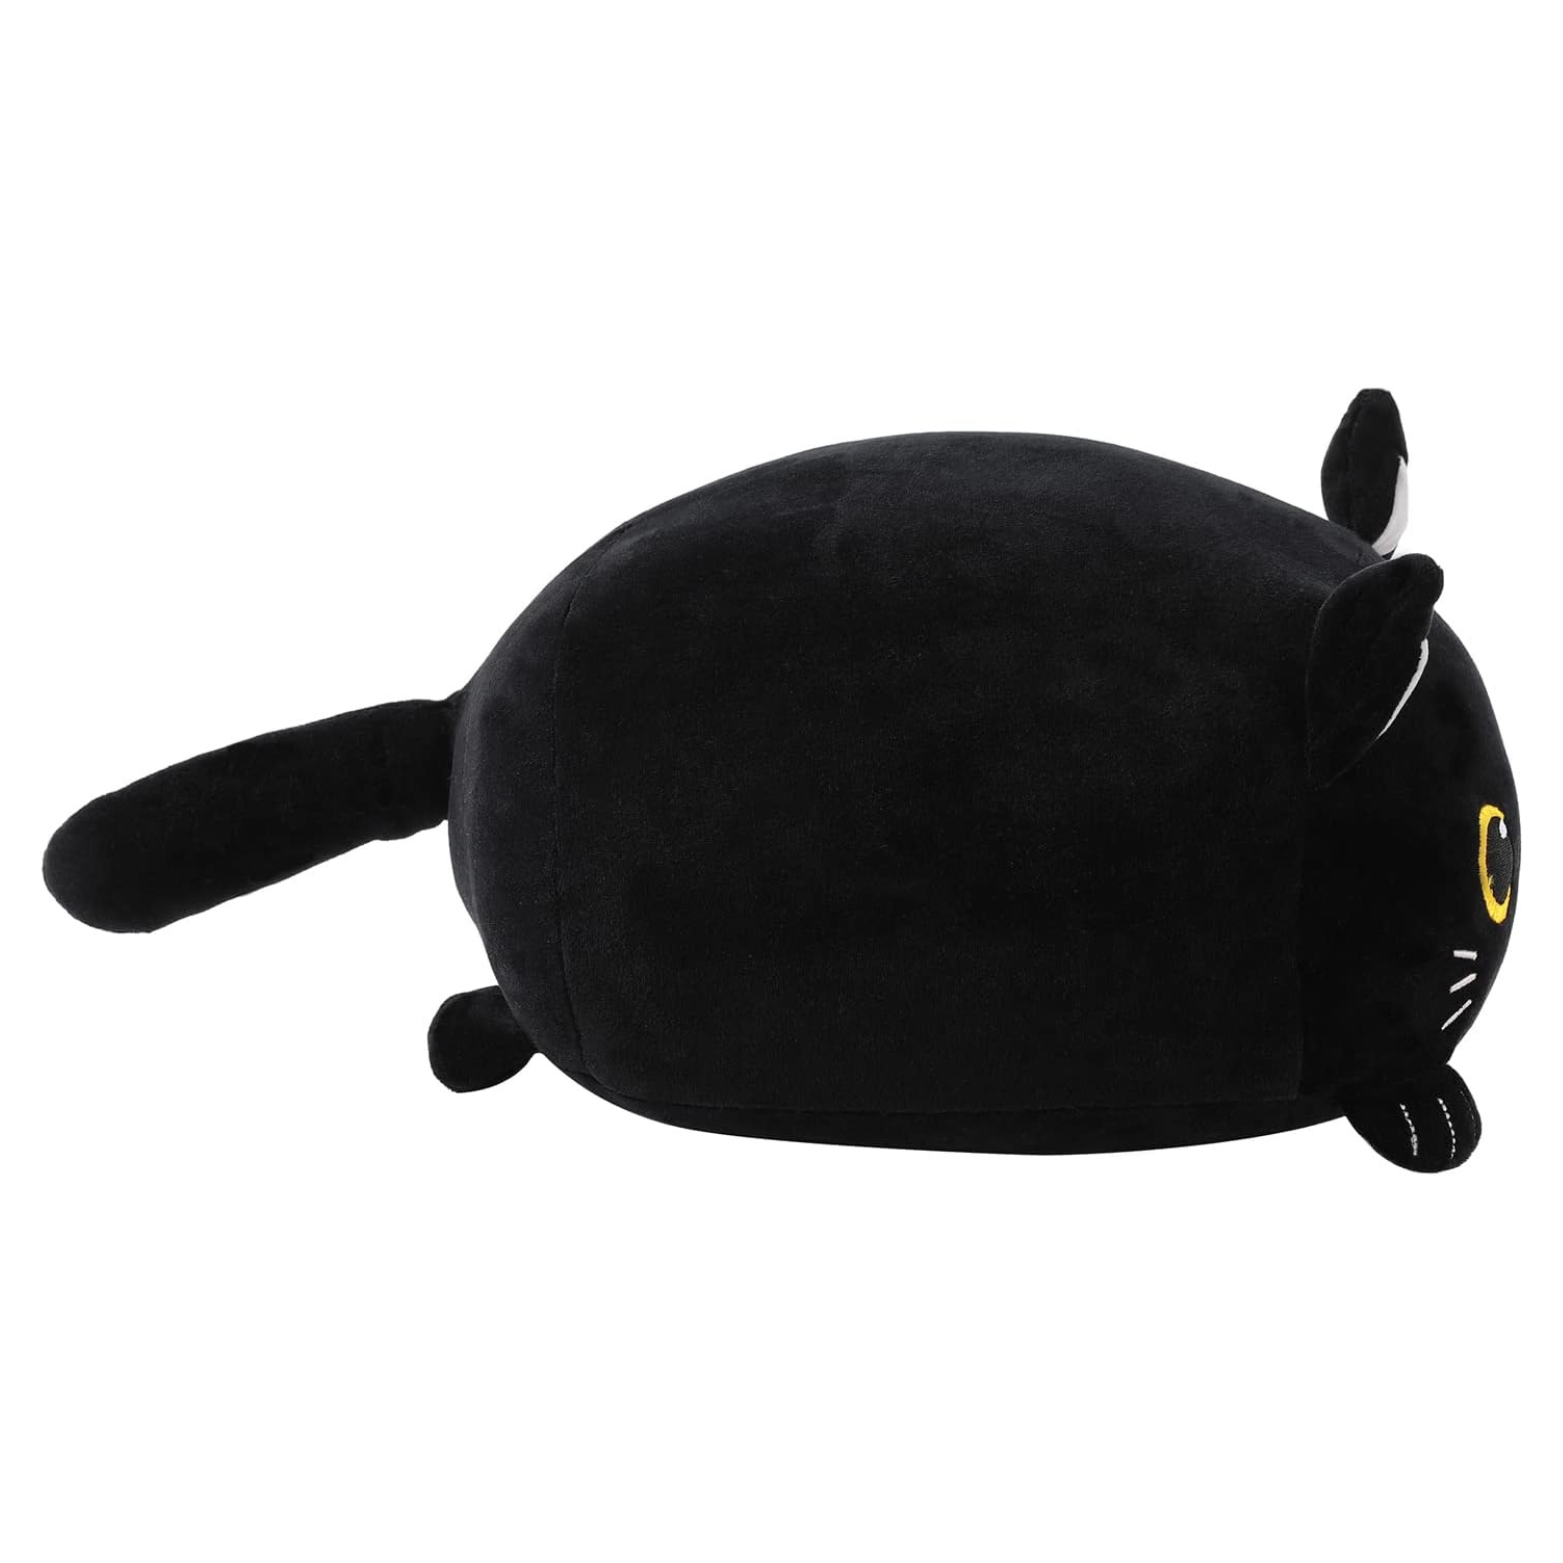 Squishmallow - Cat black cushion